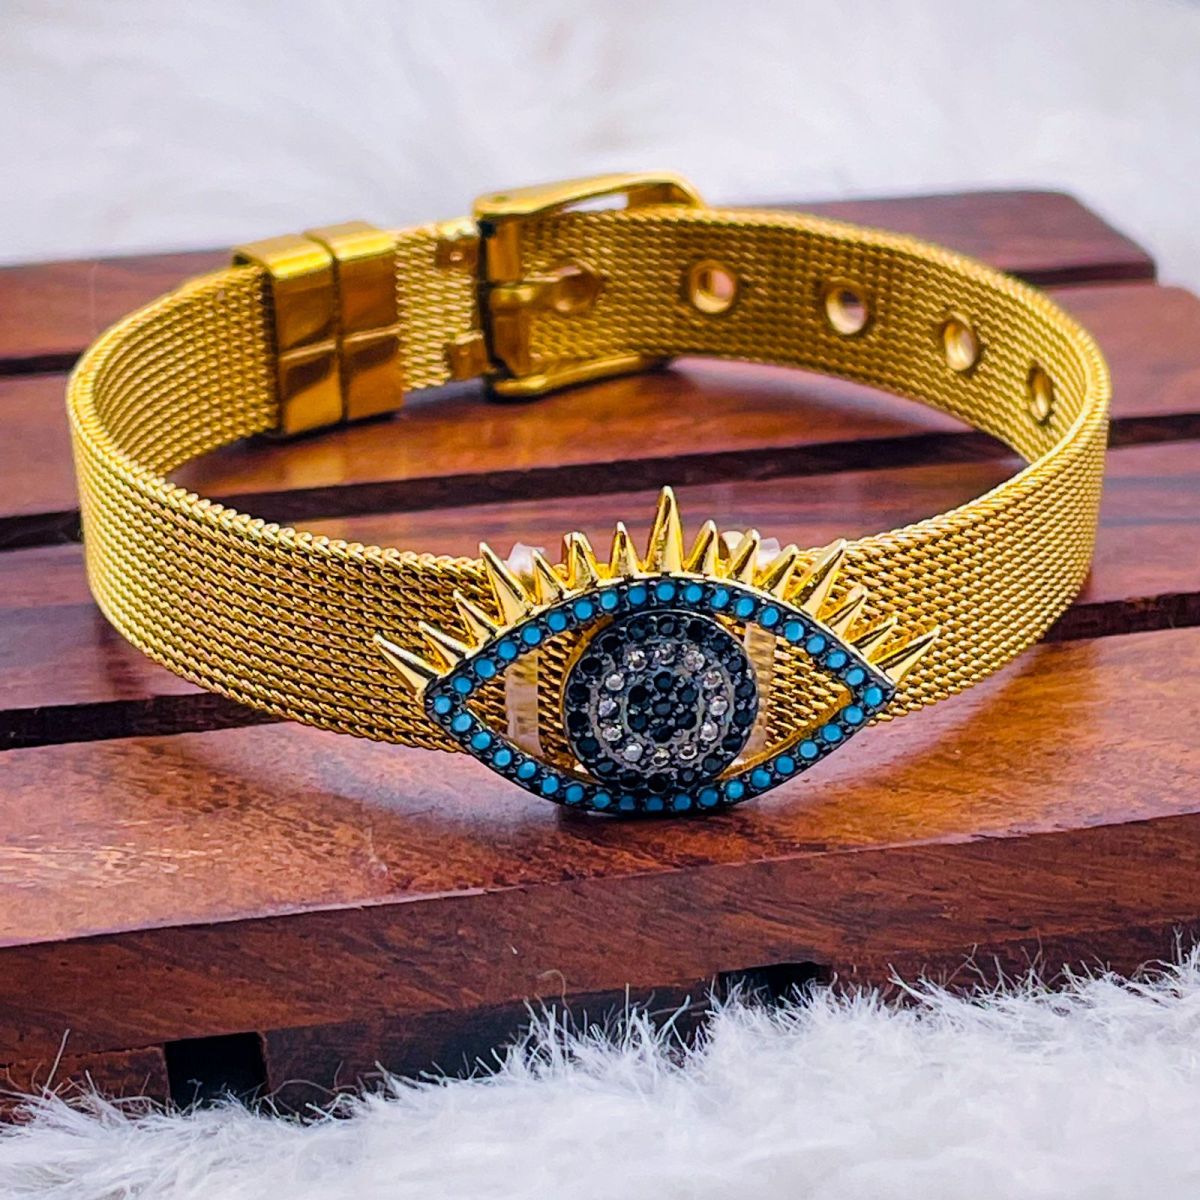 Lips motif watch mesh strap bracelet in gold plating -